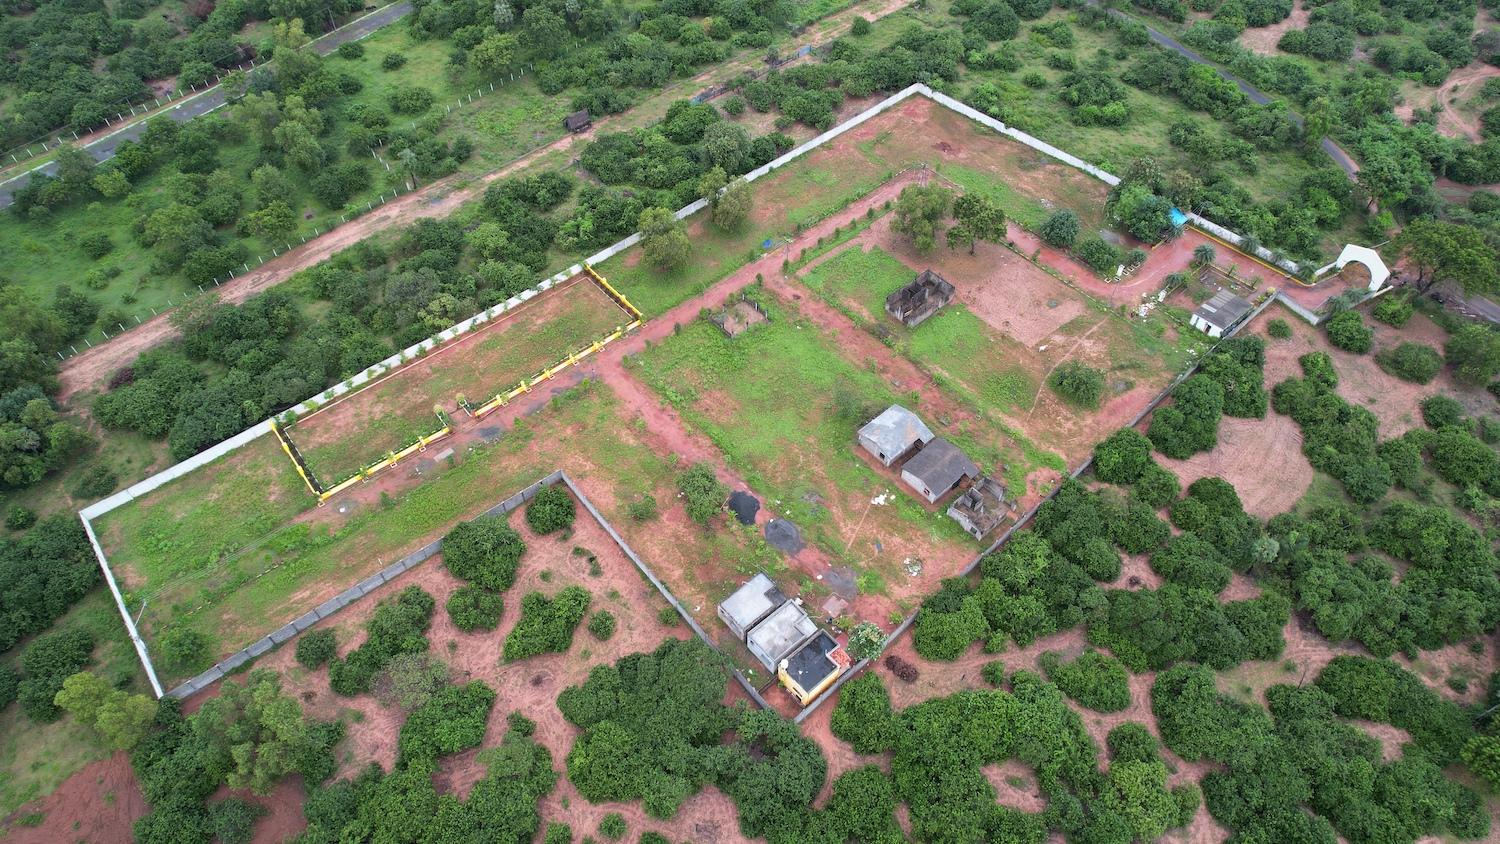 03 view from plotJPG - Farm Land Plots besides PEC in Mathur - Auroville Road